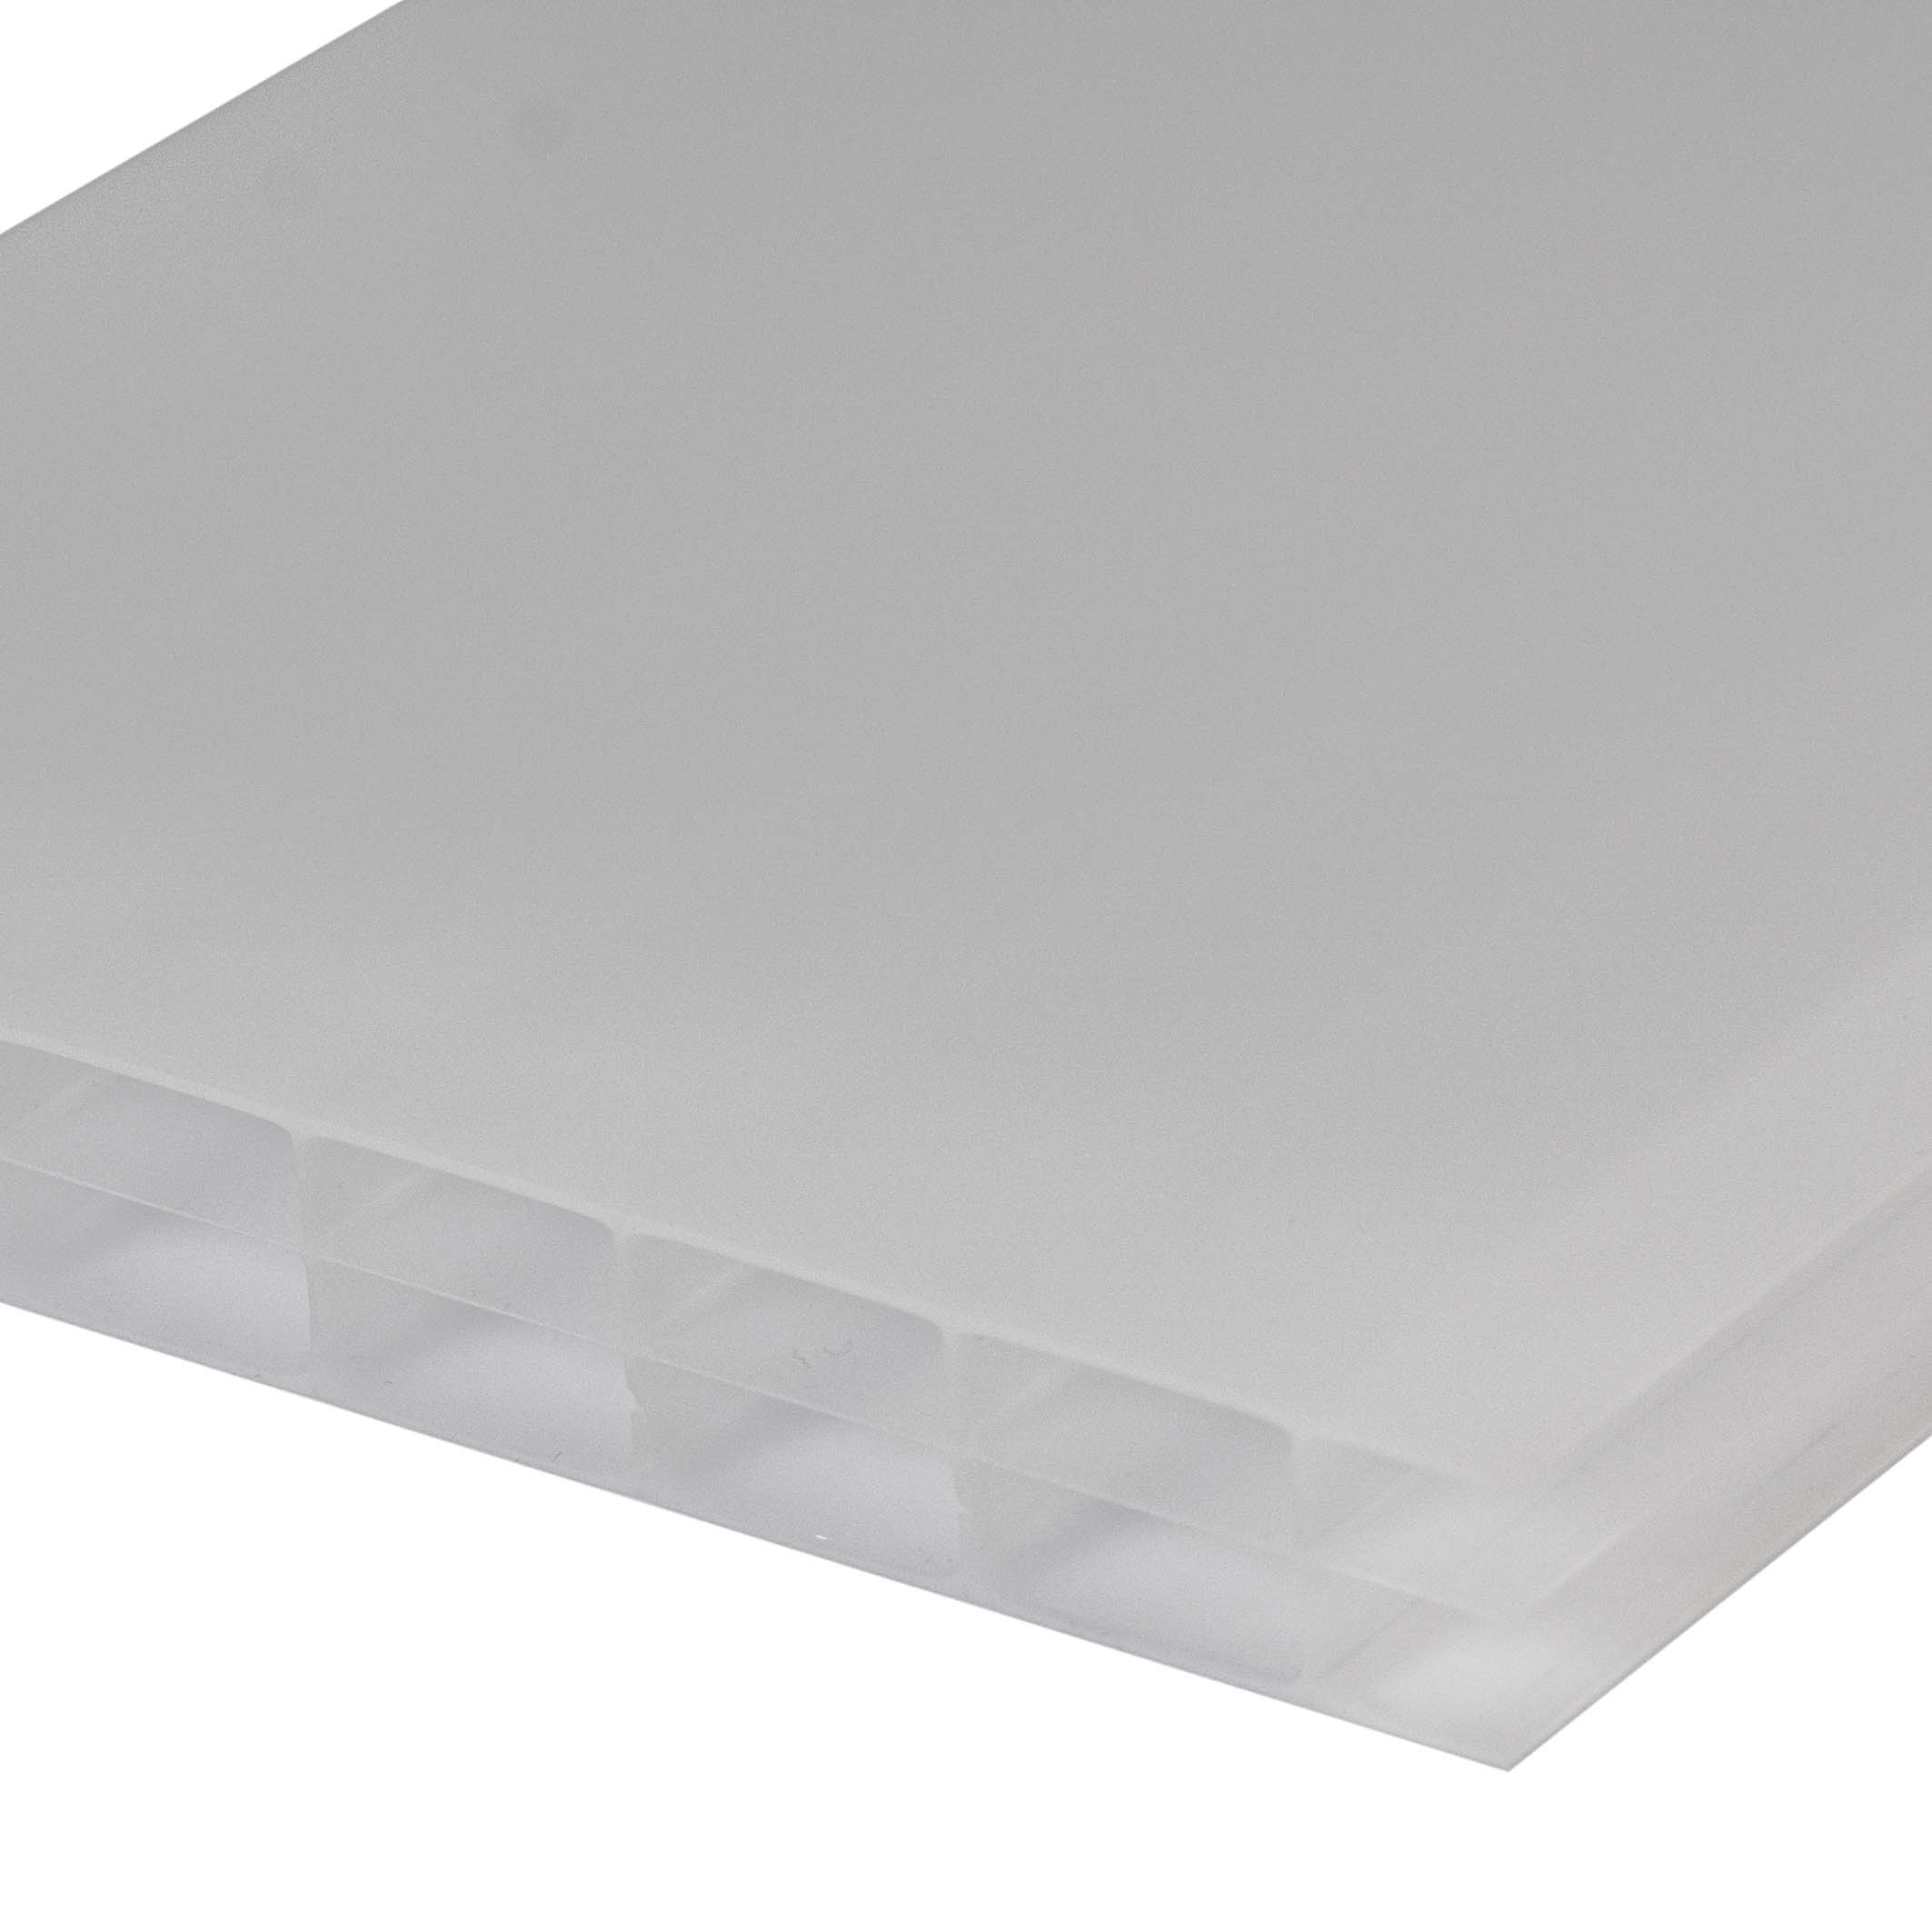 Doppelstegplatte 16 mm Weiß / Opal - Polycarbonat Hohlkammerplatten 3-fach